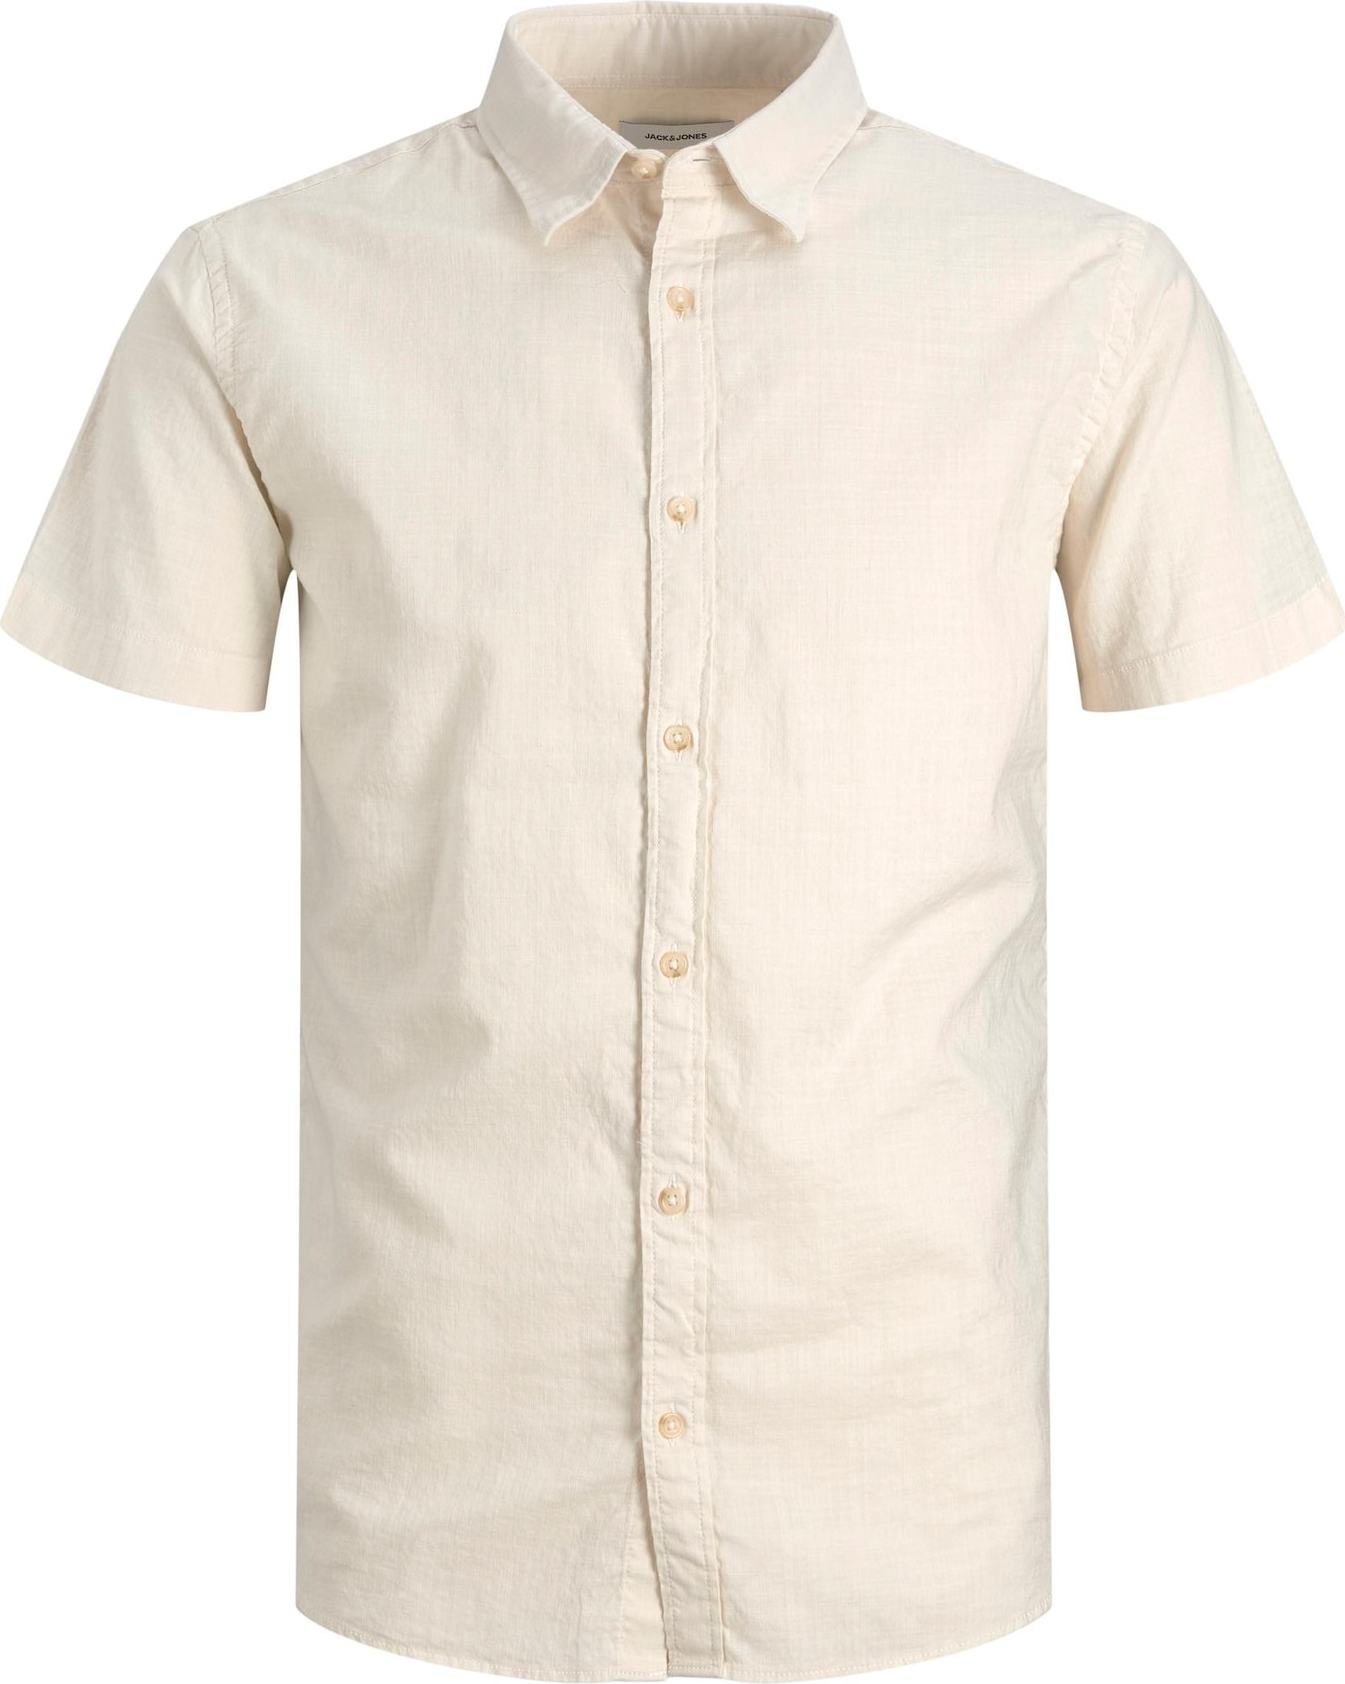 Košile 'Slub' jack & jones barva bílé vlny